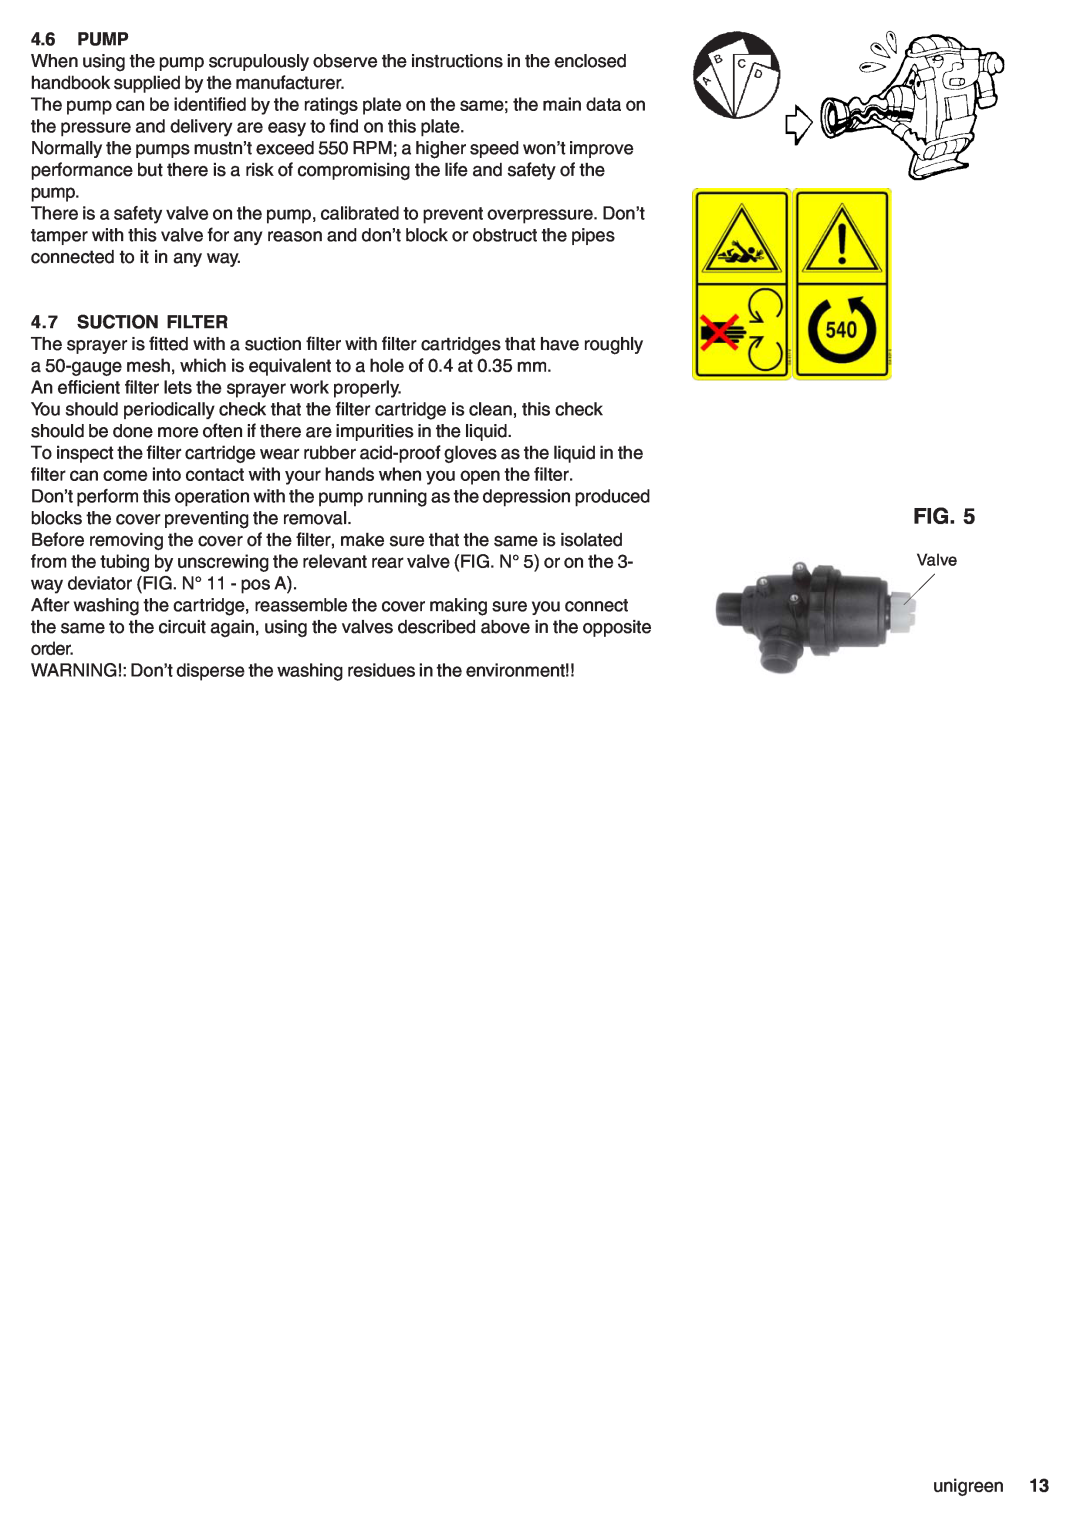 Unigreen CAMPO 11 - 16 - 22 - 32, DSP 11 - 16 - 22 - 32 manual Pump, Suction Filter, Valve 